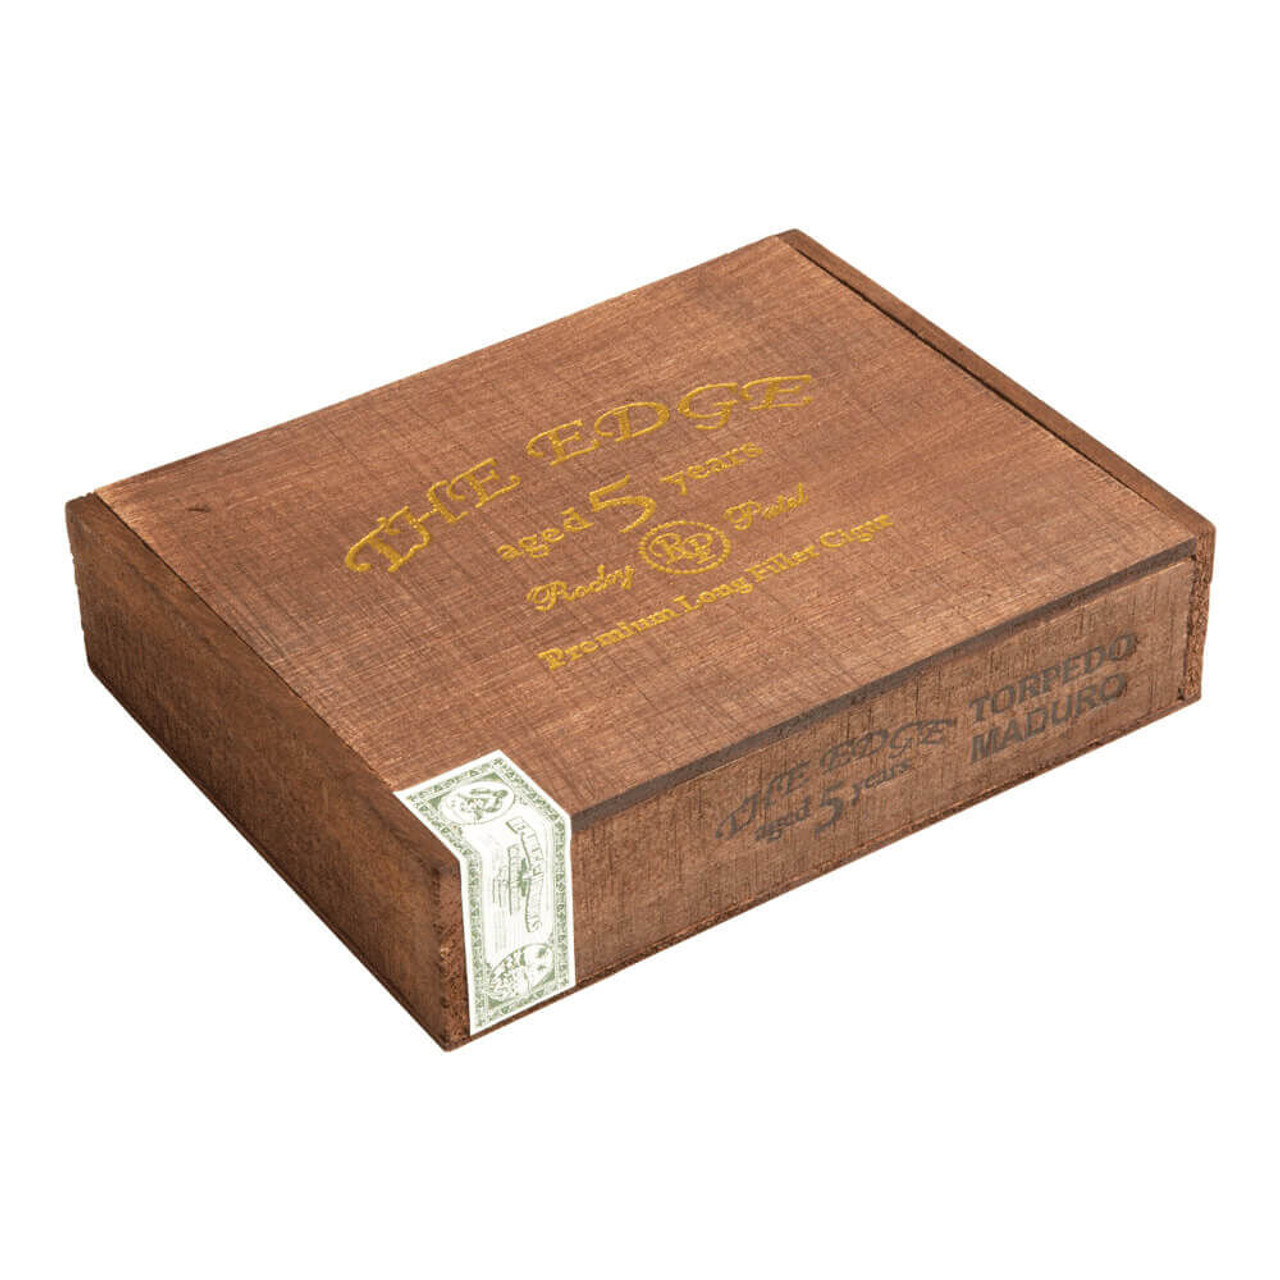 Rocky Patel The Edge Maduro Robusto Cigars - 5.5 x 50 (Box of 20) *Box